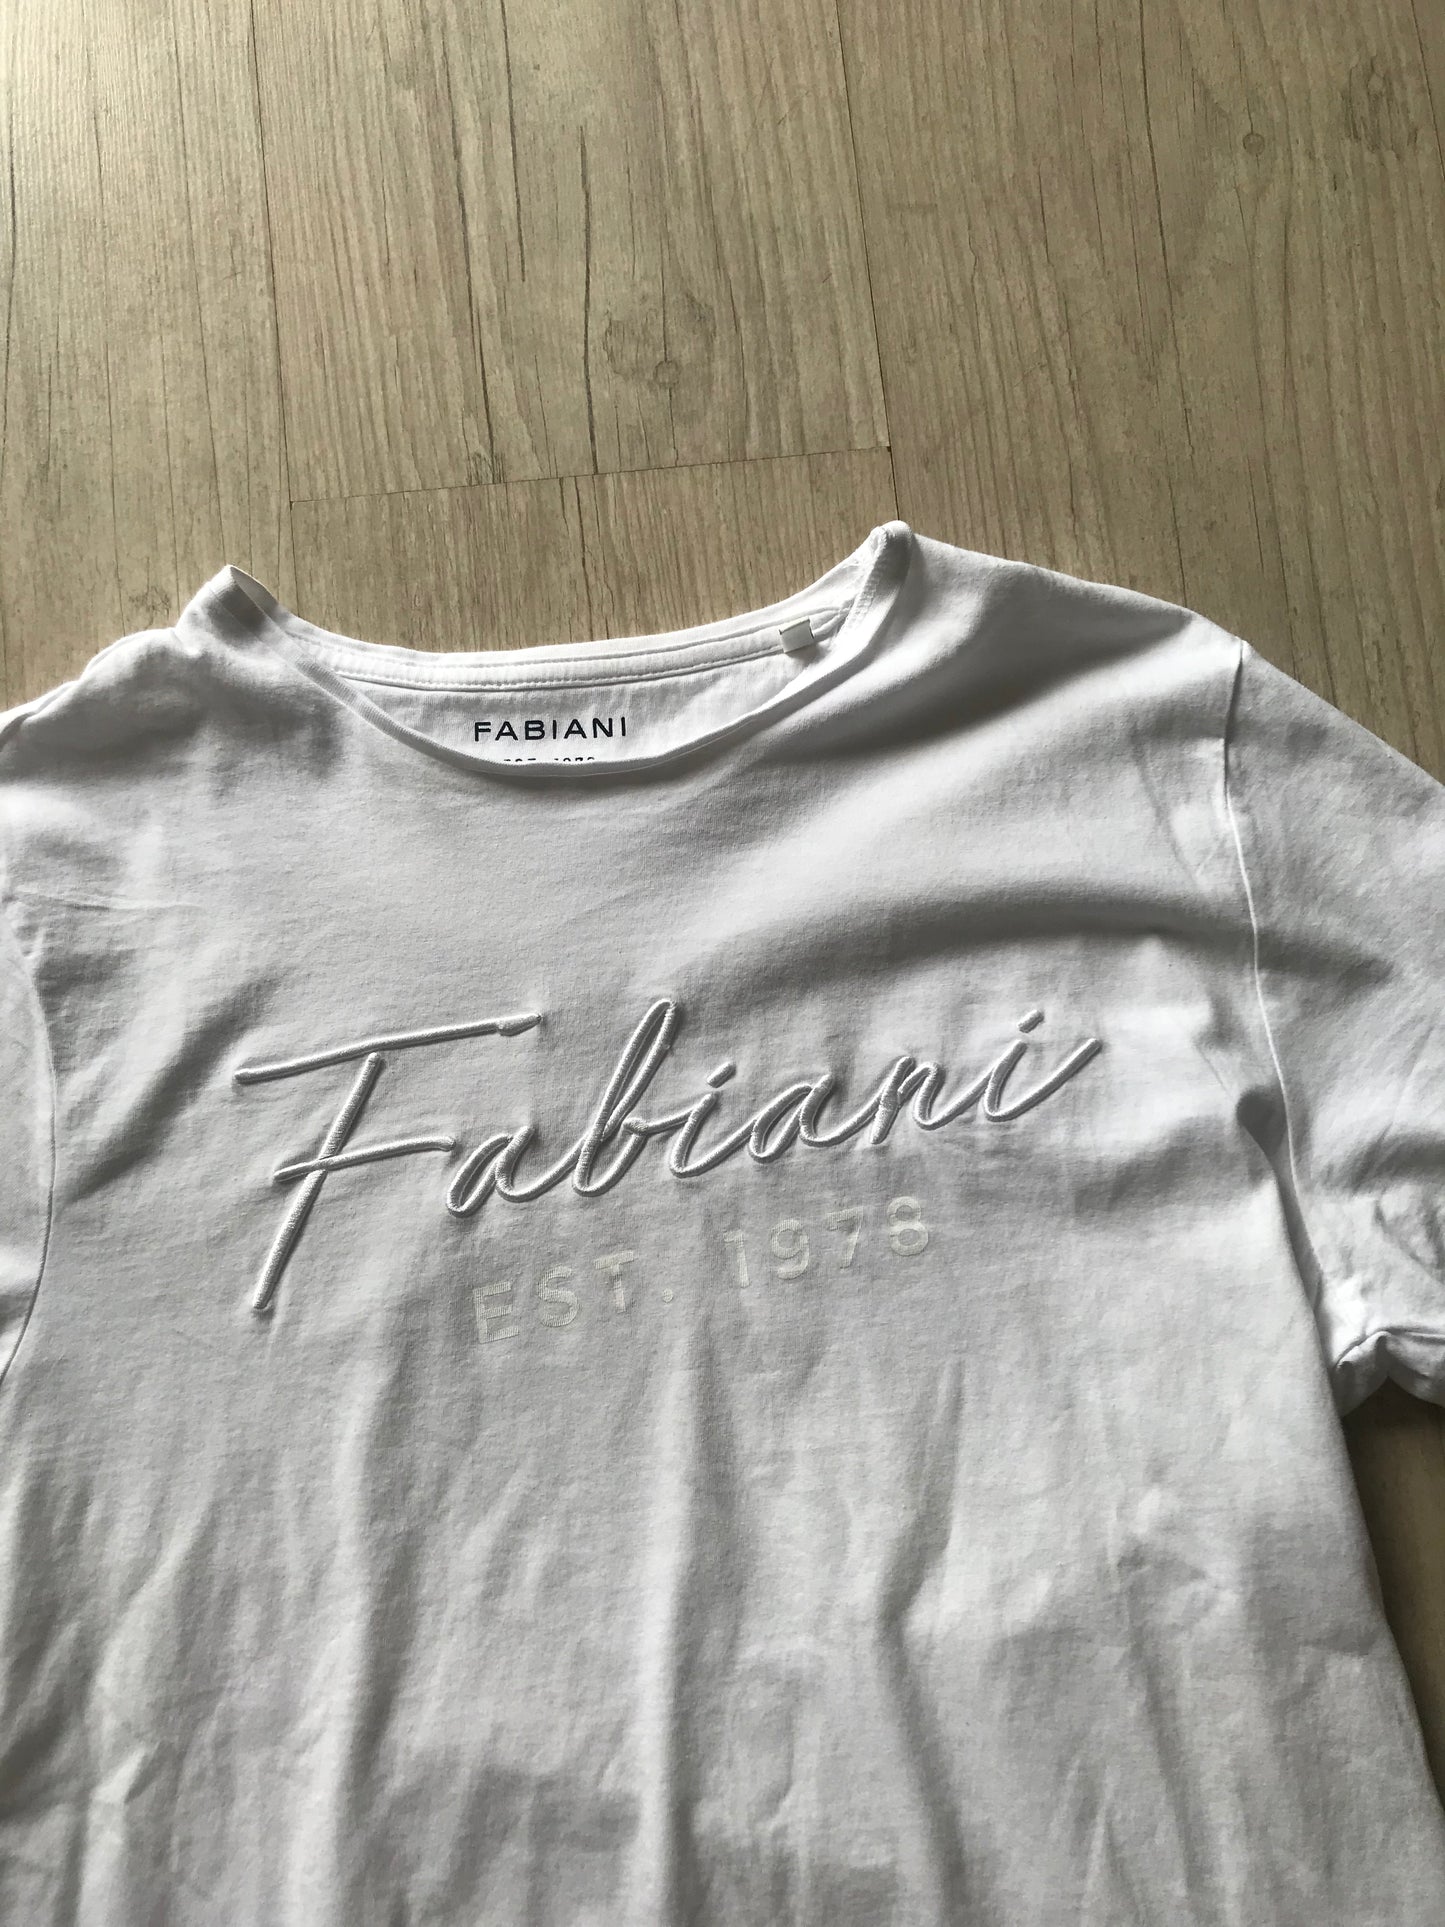 Fabiani Signature White T-shirt